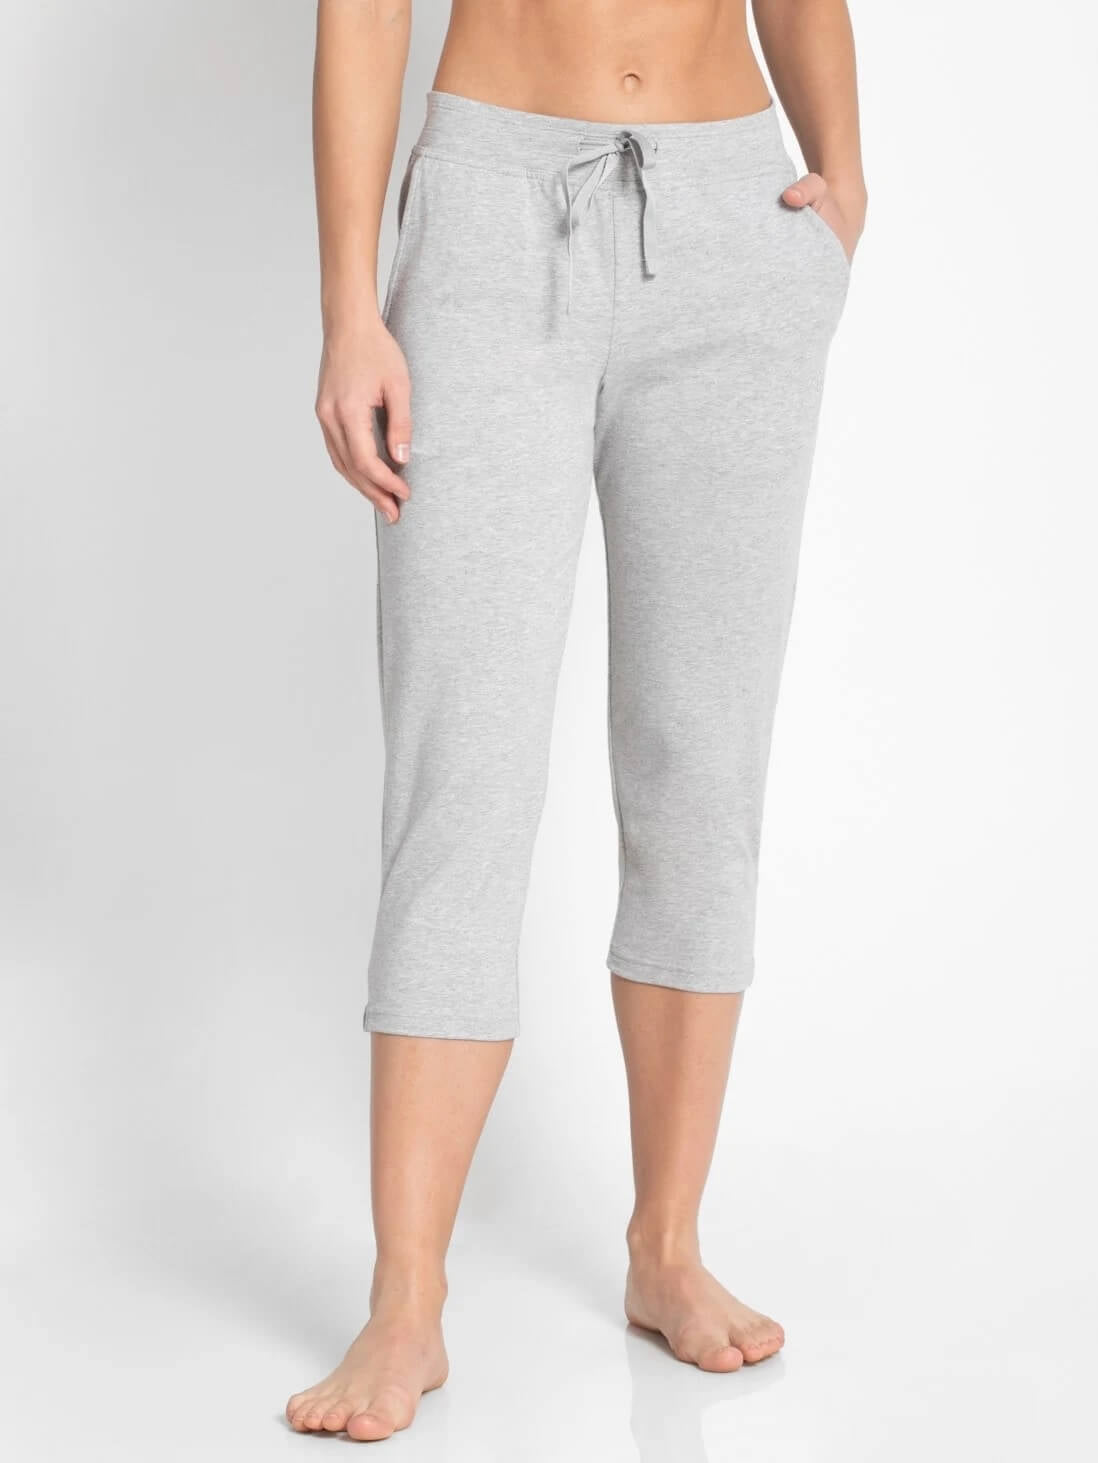 Jockey Grey Melange Capri Pants for Women #1300 [New Fit]